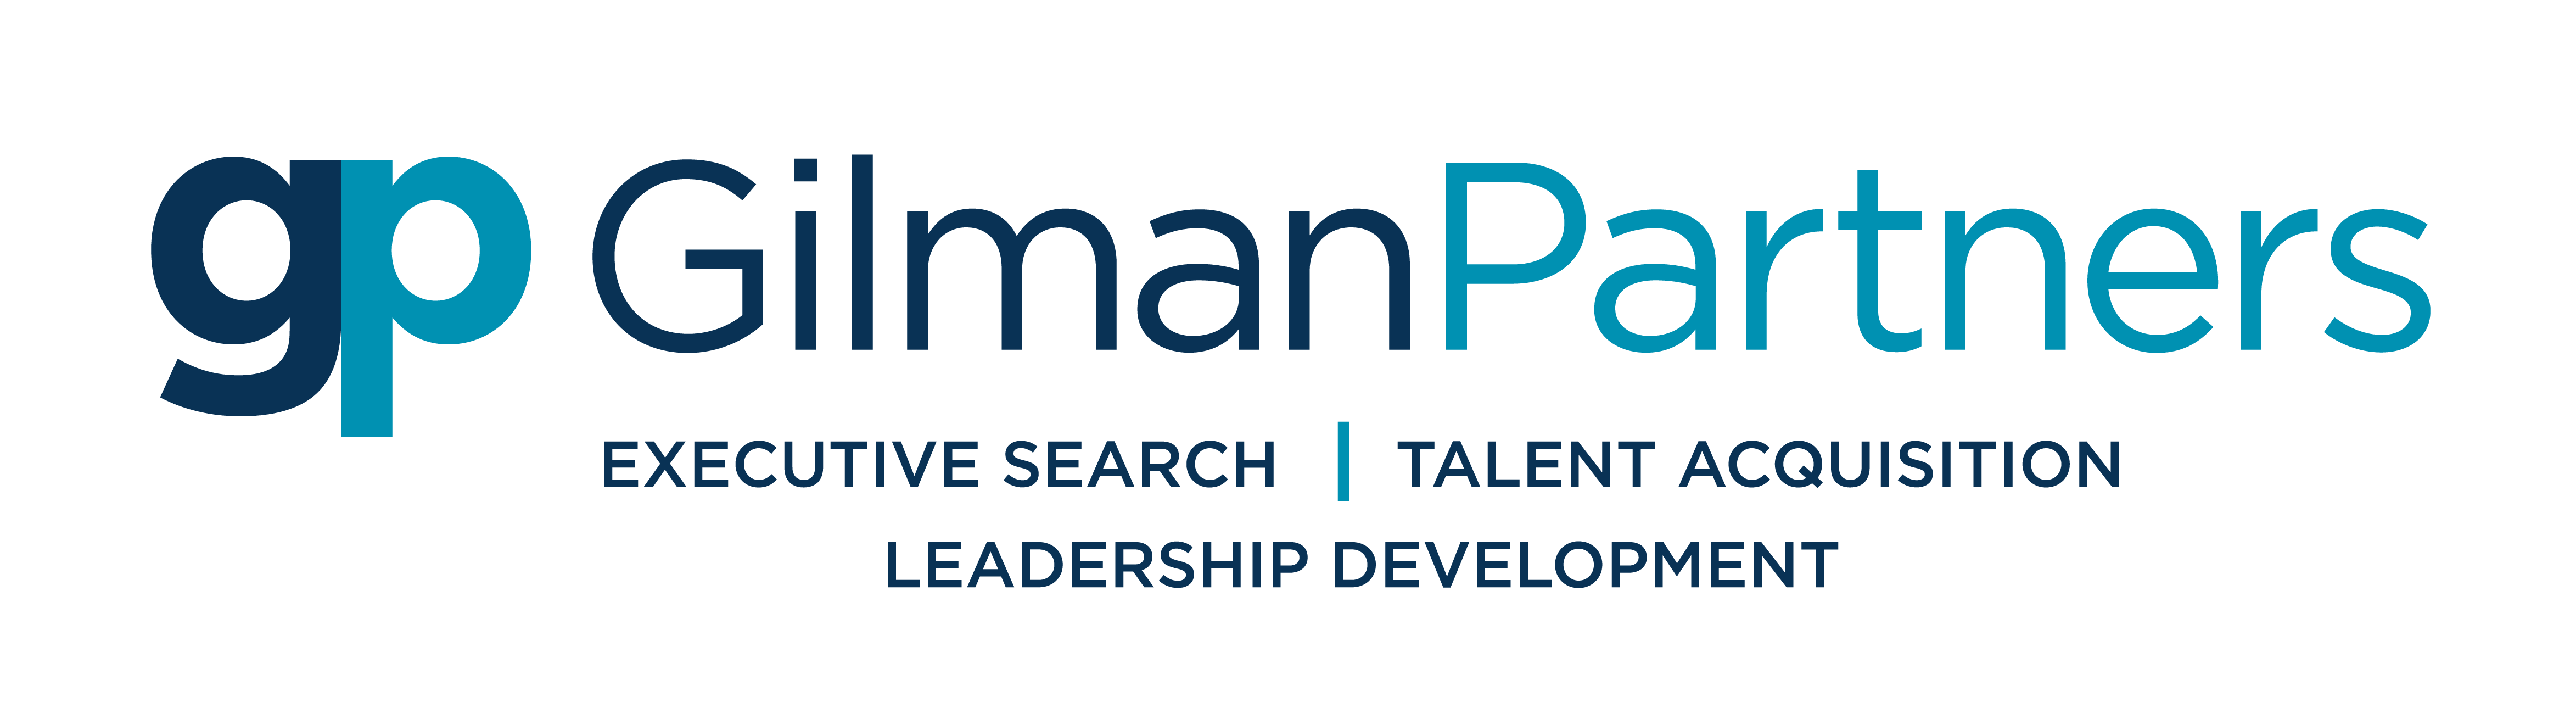 Gilman Partners logo